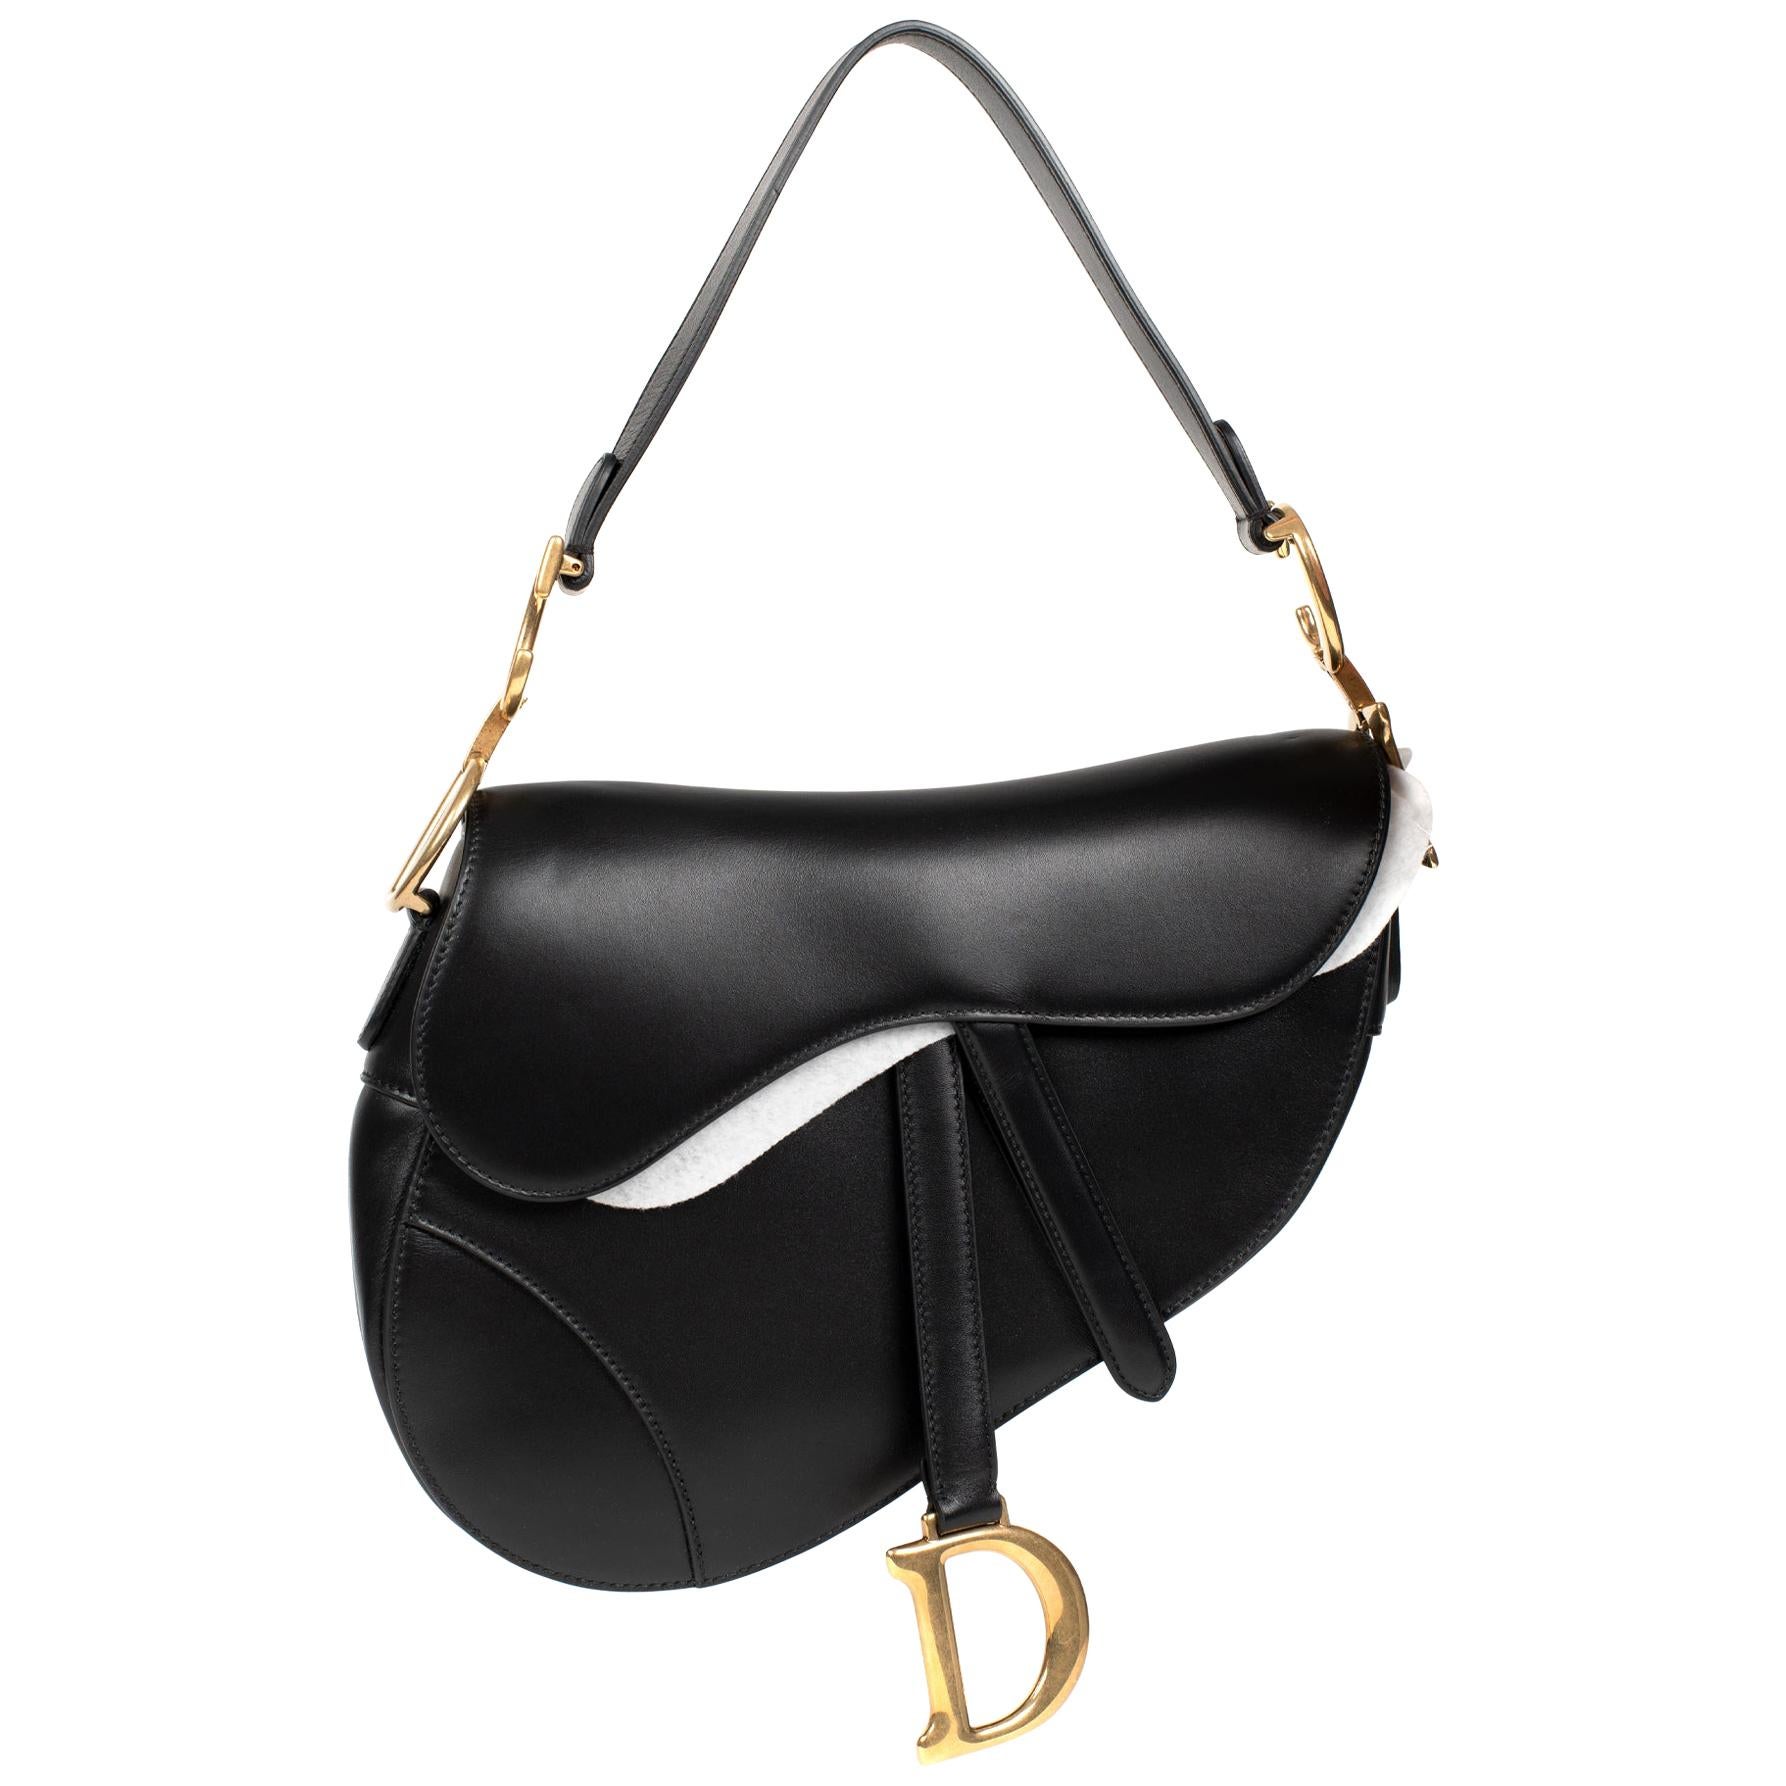 Amazing NEW Christian Dior Saddle bag in box black calfskin, golden hardware